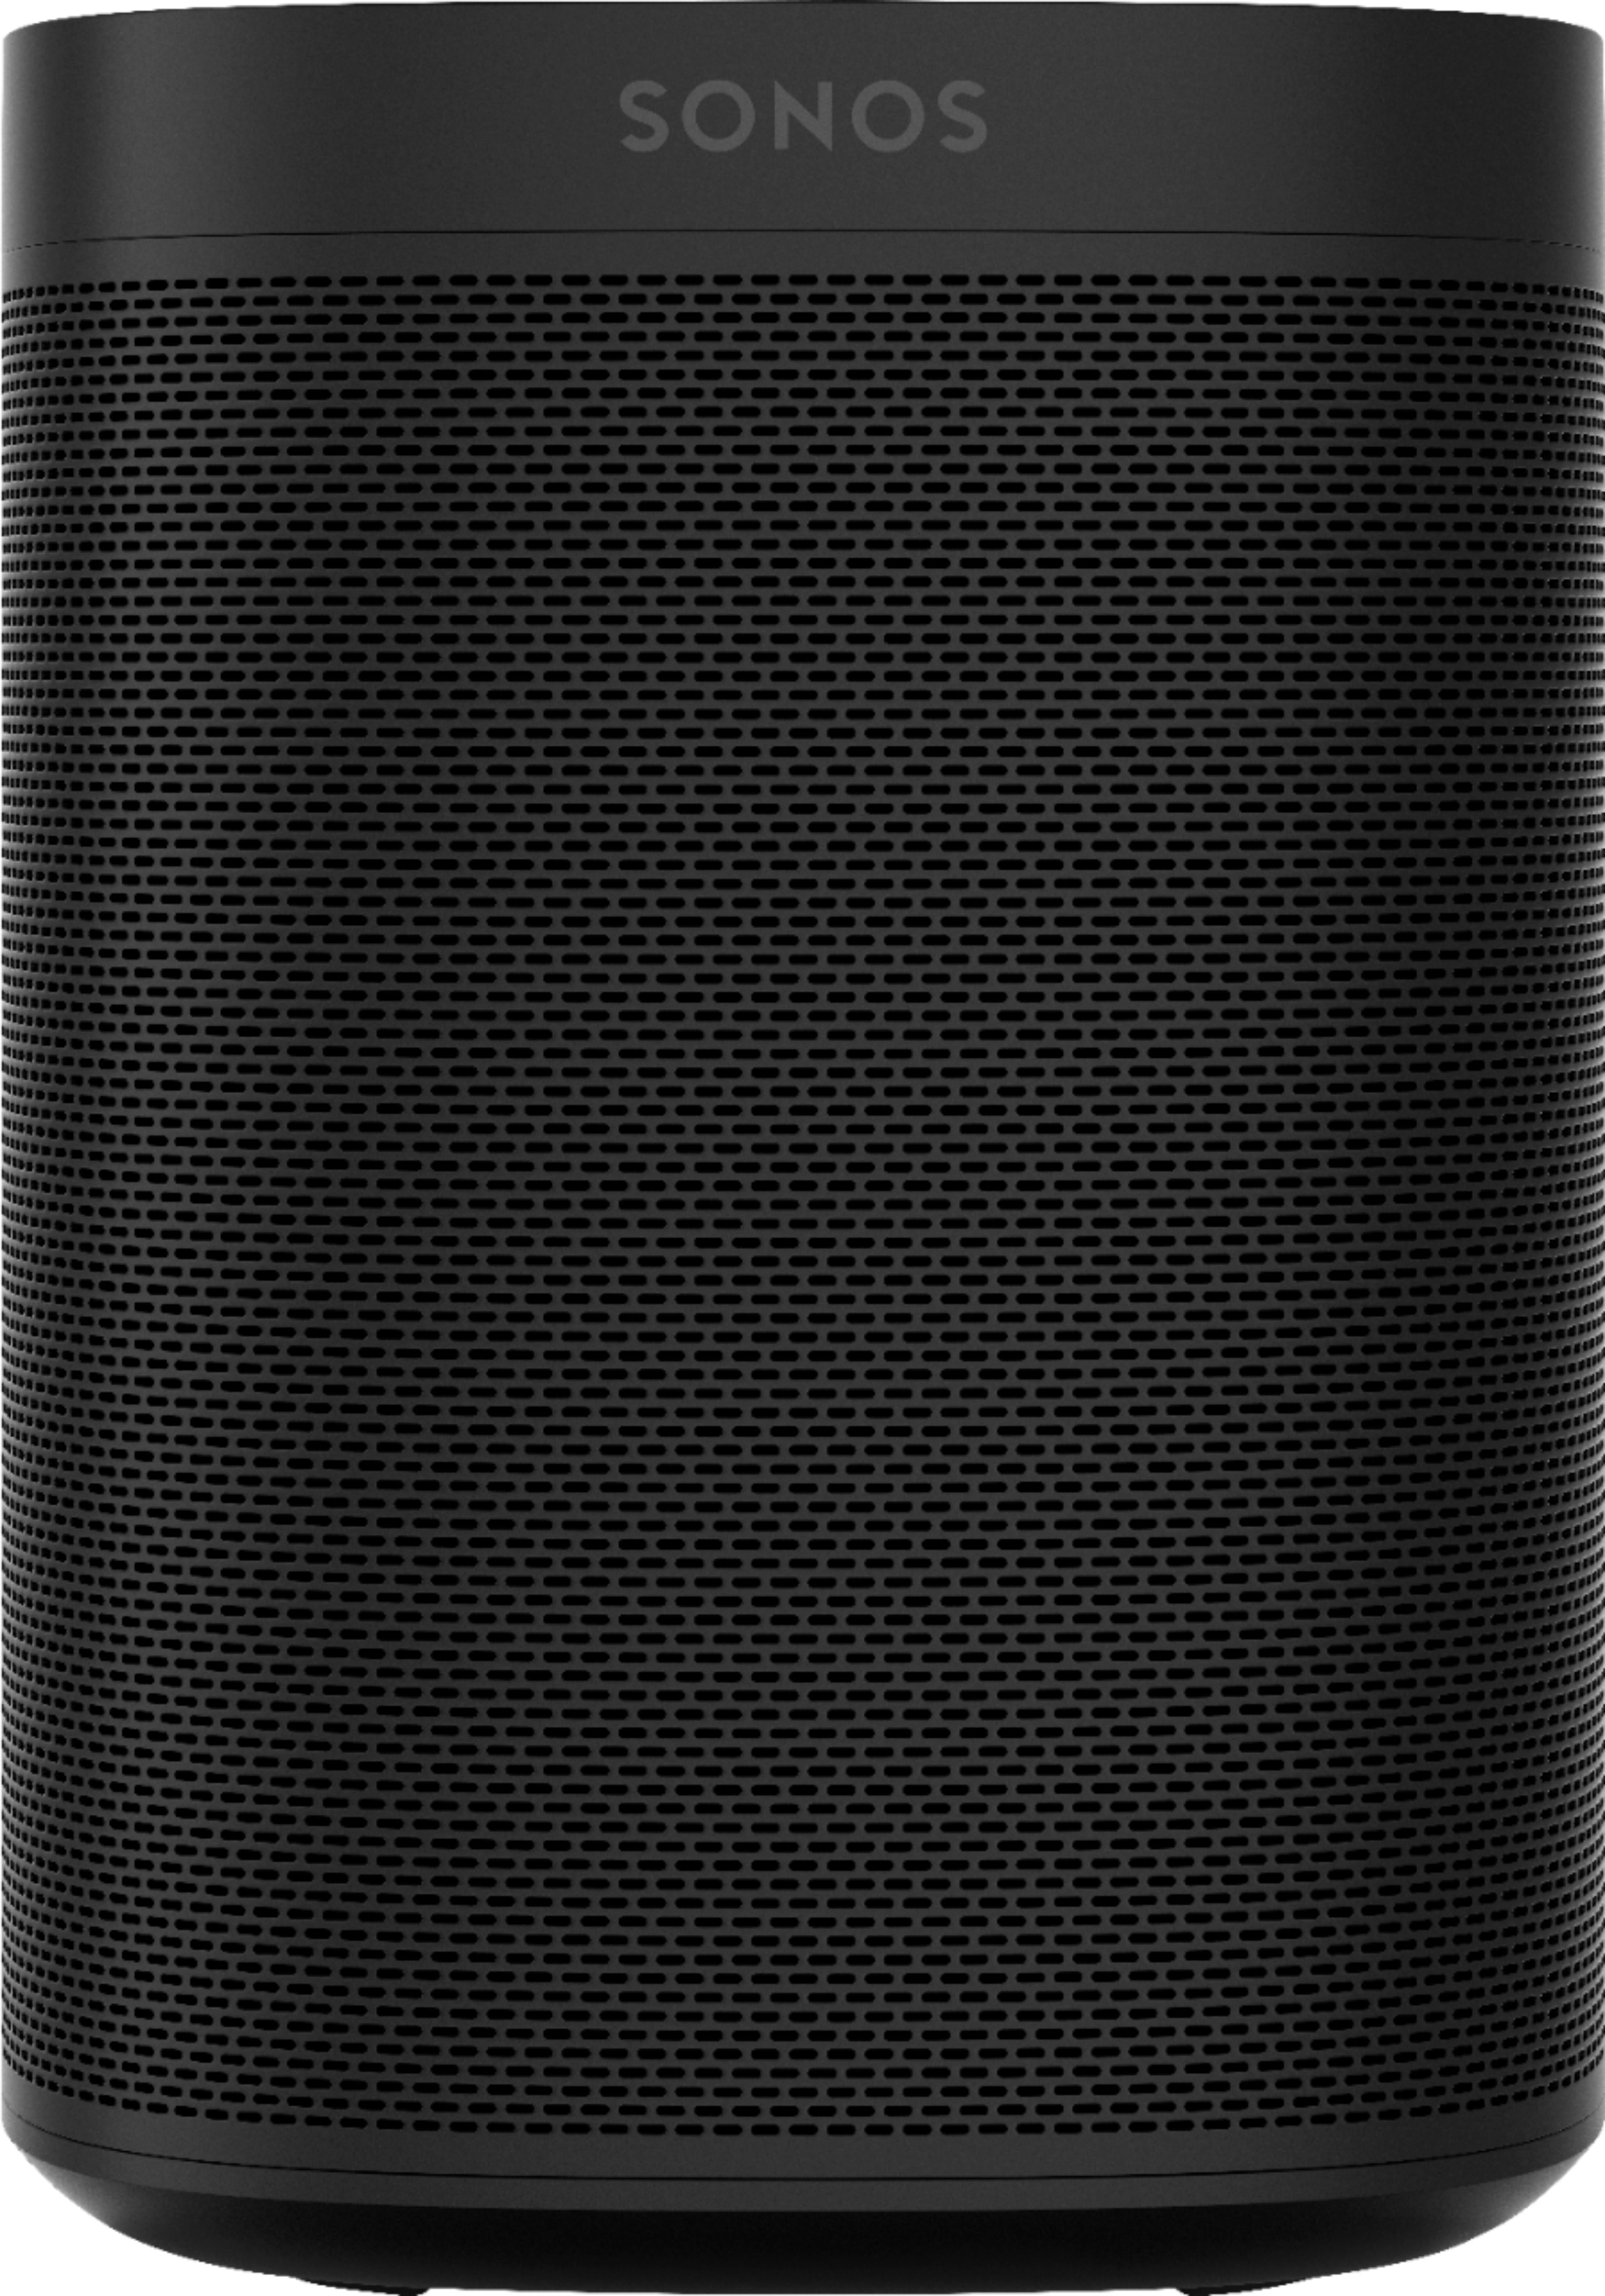 Sonos One SL Wireless Smart Speaker Black ONESLUS1BLK - Best Buy | Best Buy U.S.